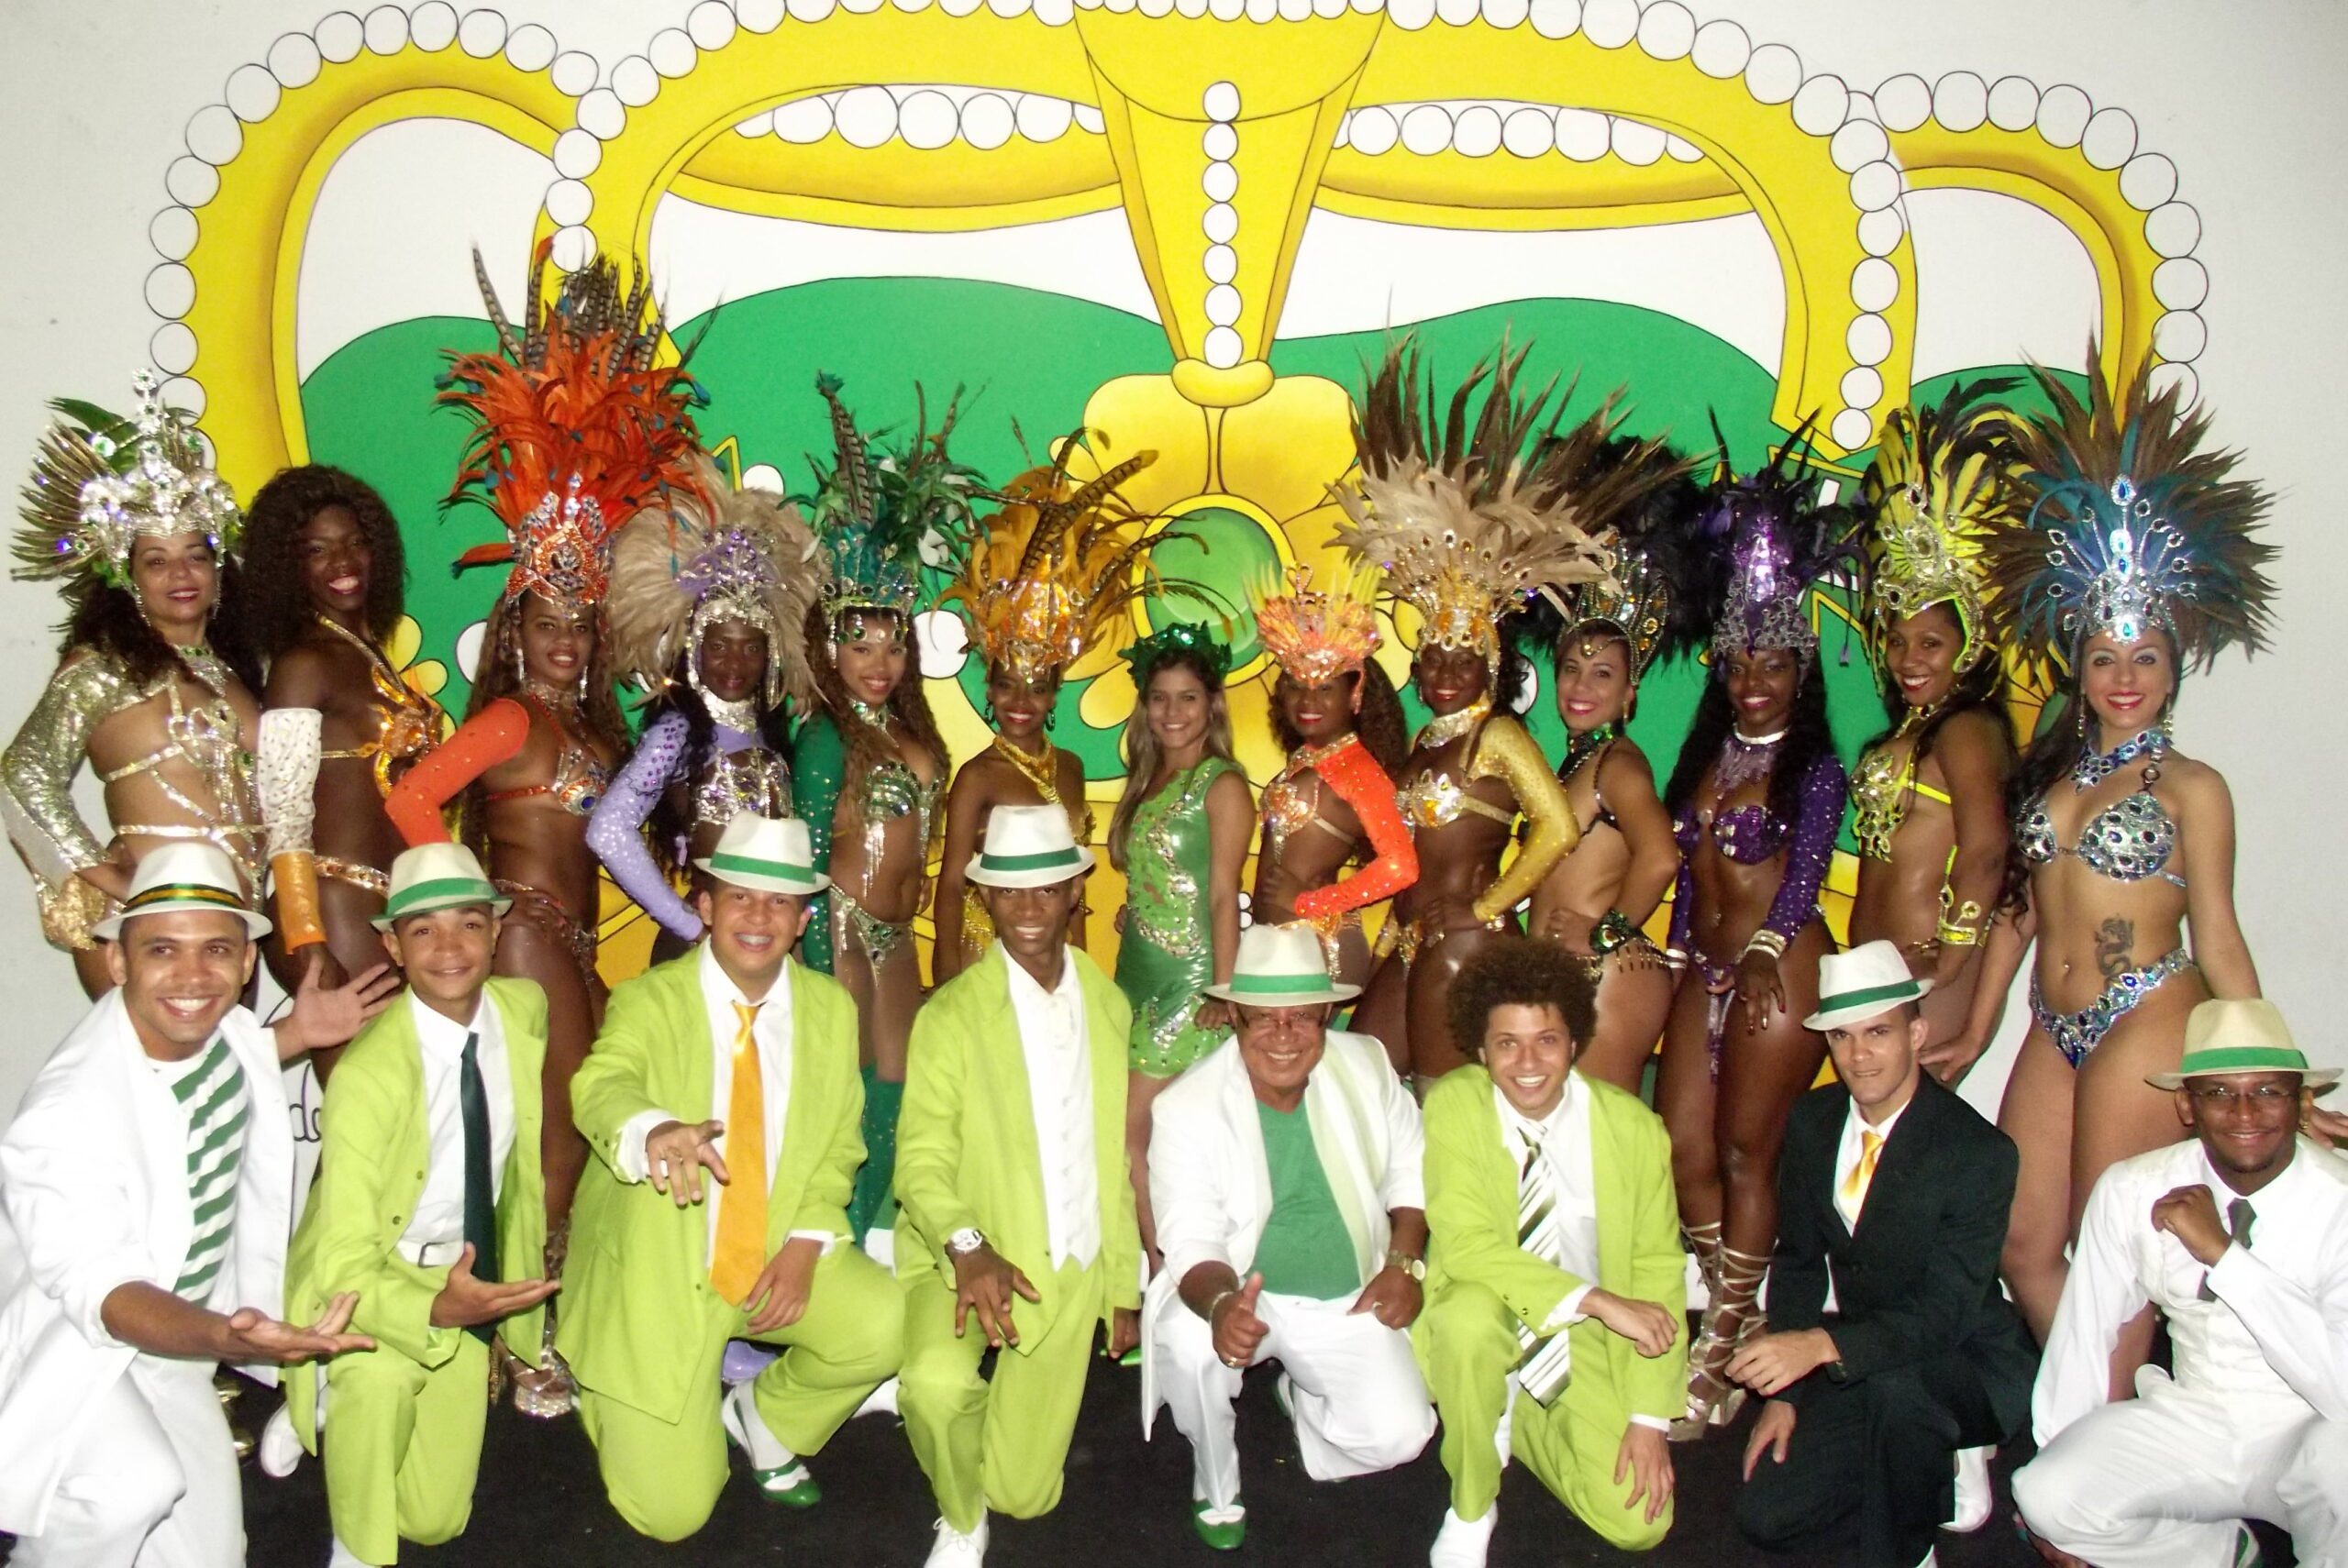 Imperatriz promove encontro de passistas no próximo domingo e Troféu Magníficos premia personalidades do carnaval carioca.